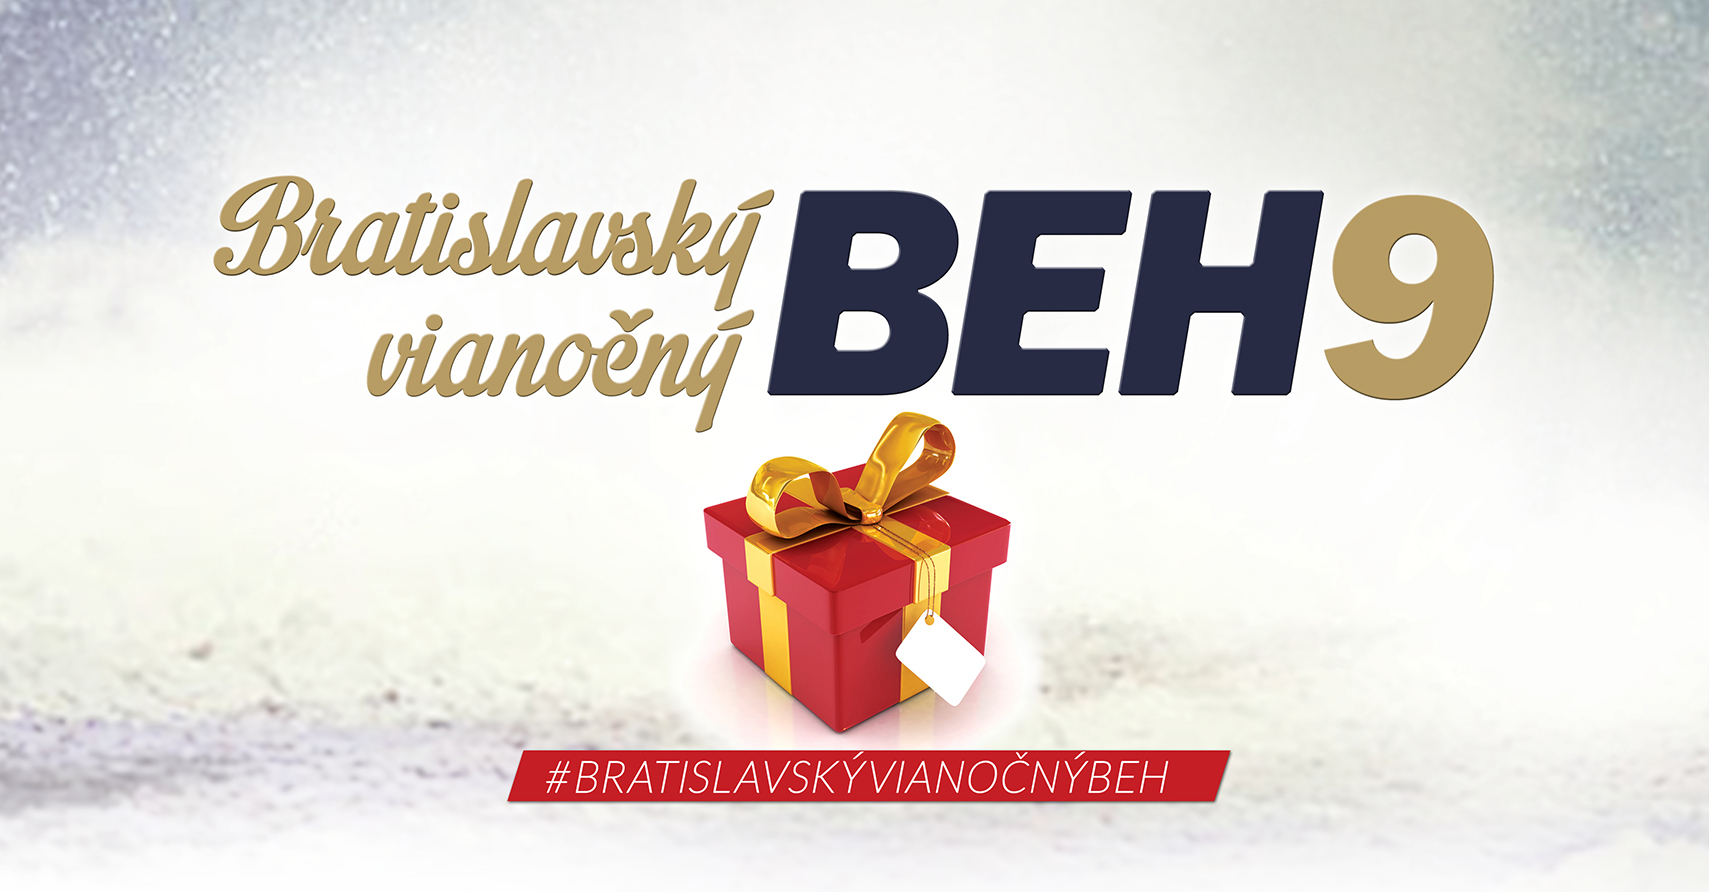 Bratislavsky vianocny beh Bratislava Registracia